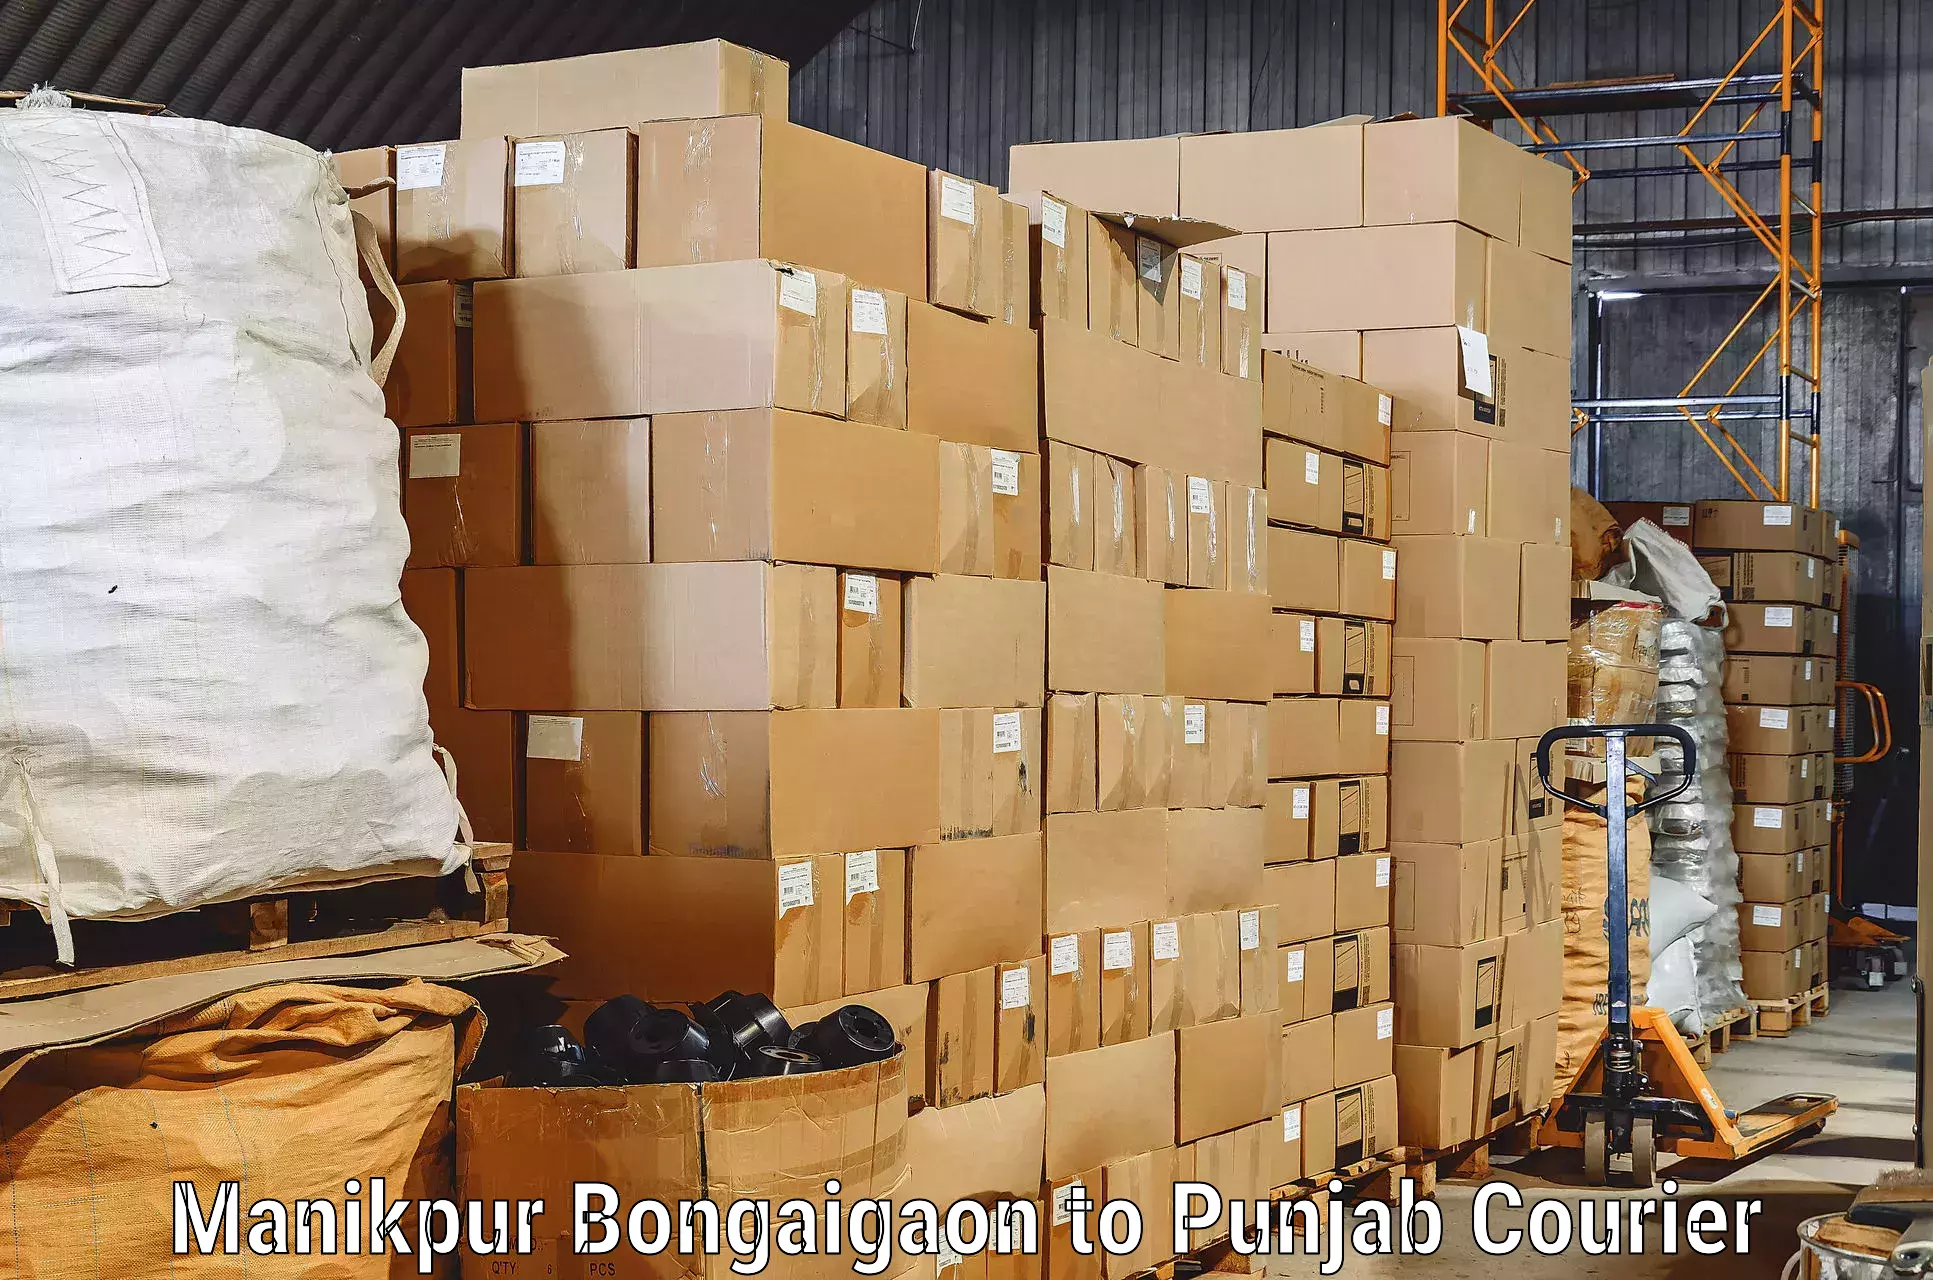 Professional moving assistance Manikpur Bongaigaon to Garhshankar